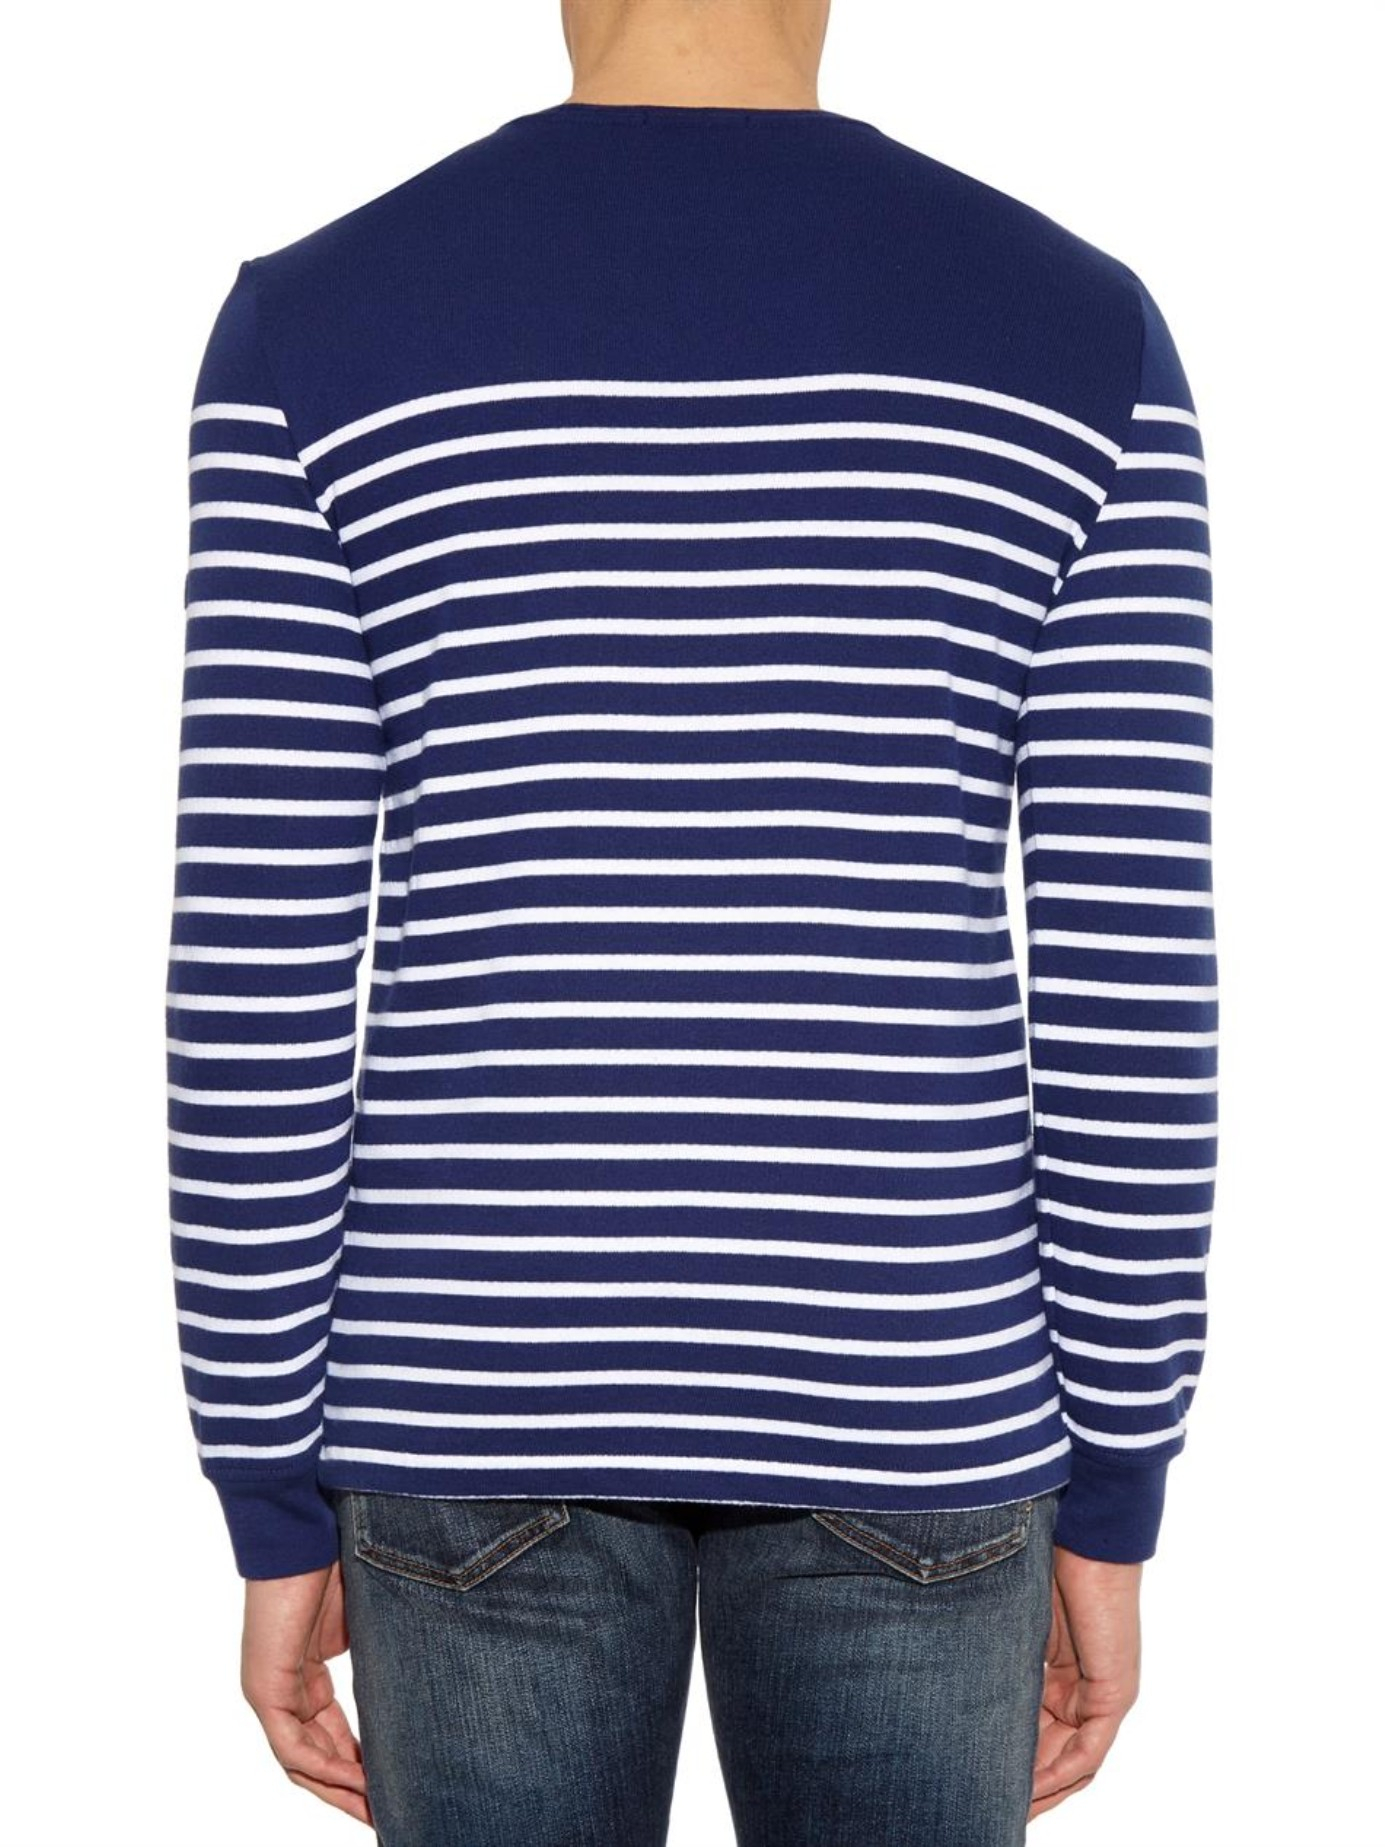 Lyst - Polo Ralph Lauren Breton-Stripe Crew-Neck Sweater in Blue for Men